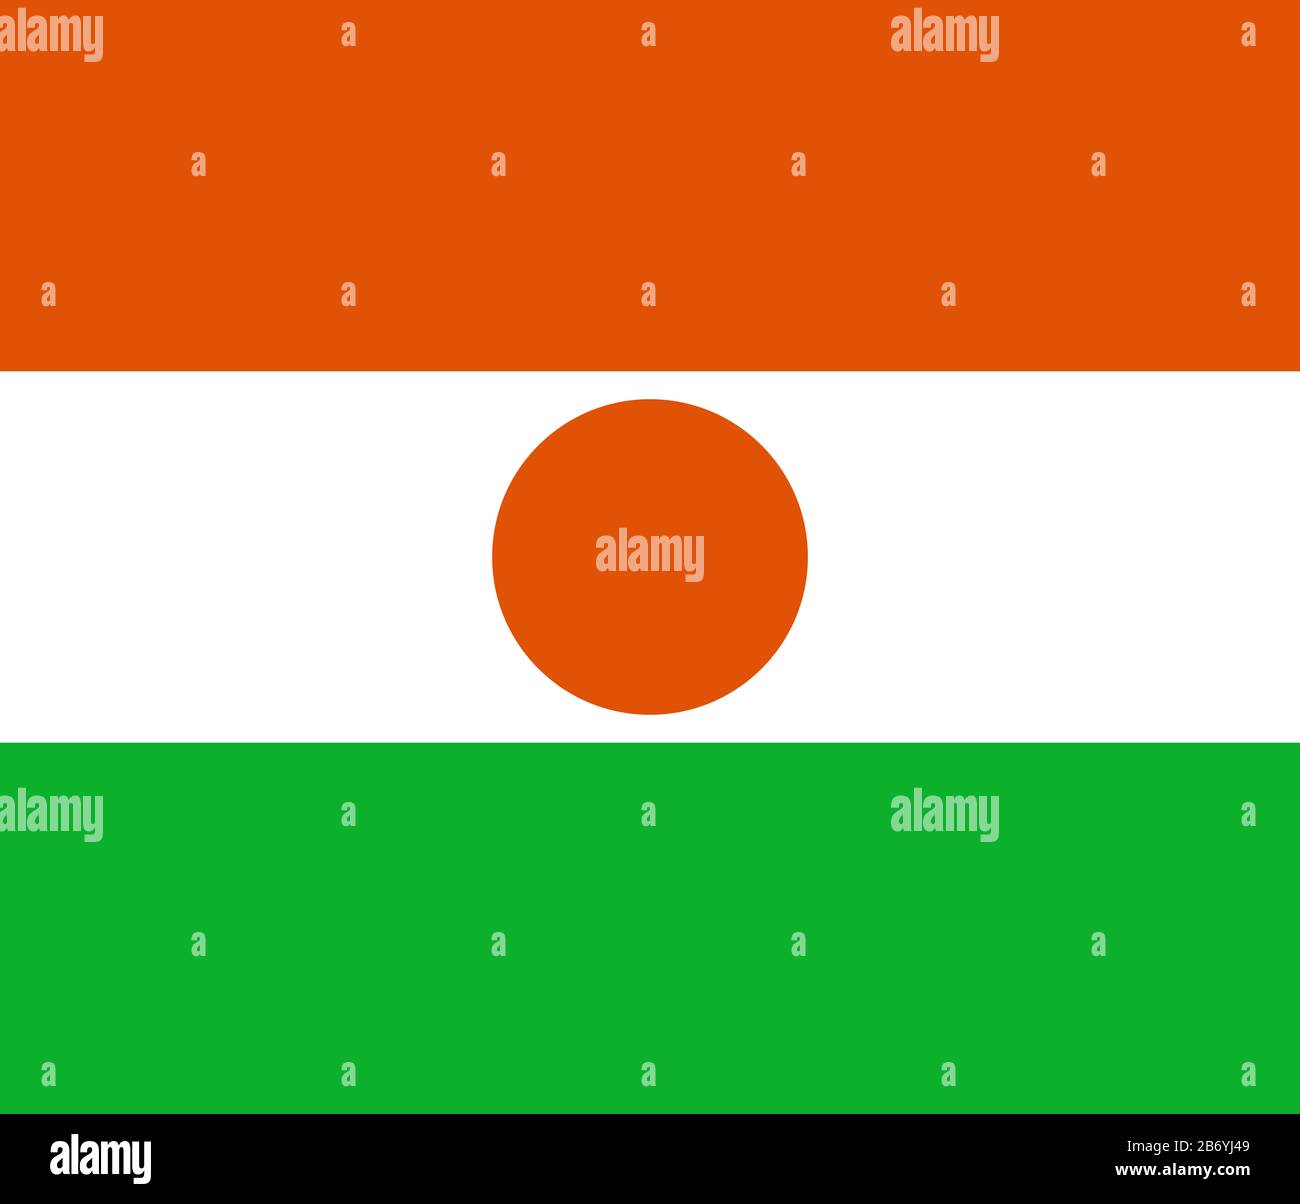 Flagge Nigers - Nigerien Flag Standard Ratio - True RGB Color Mode Stockfoto